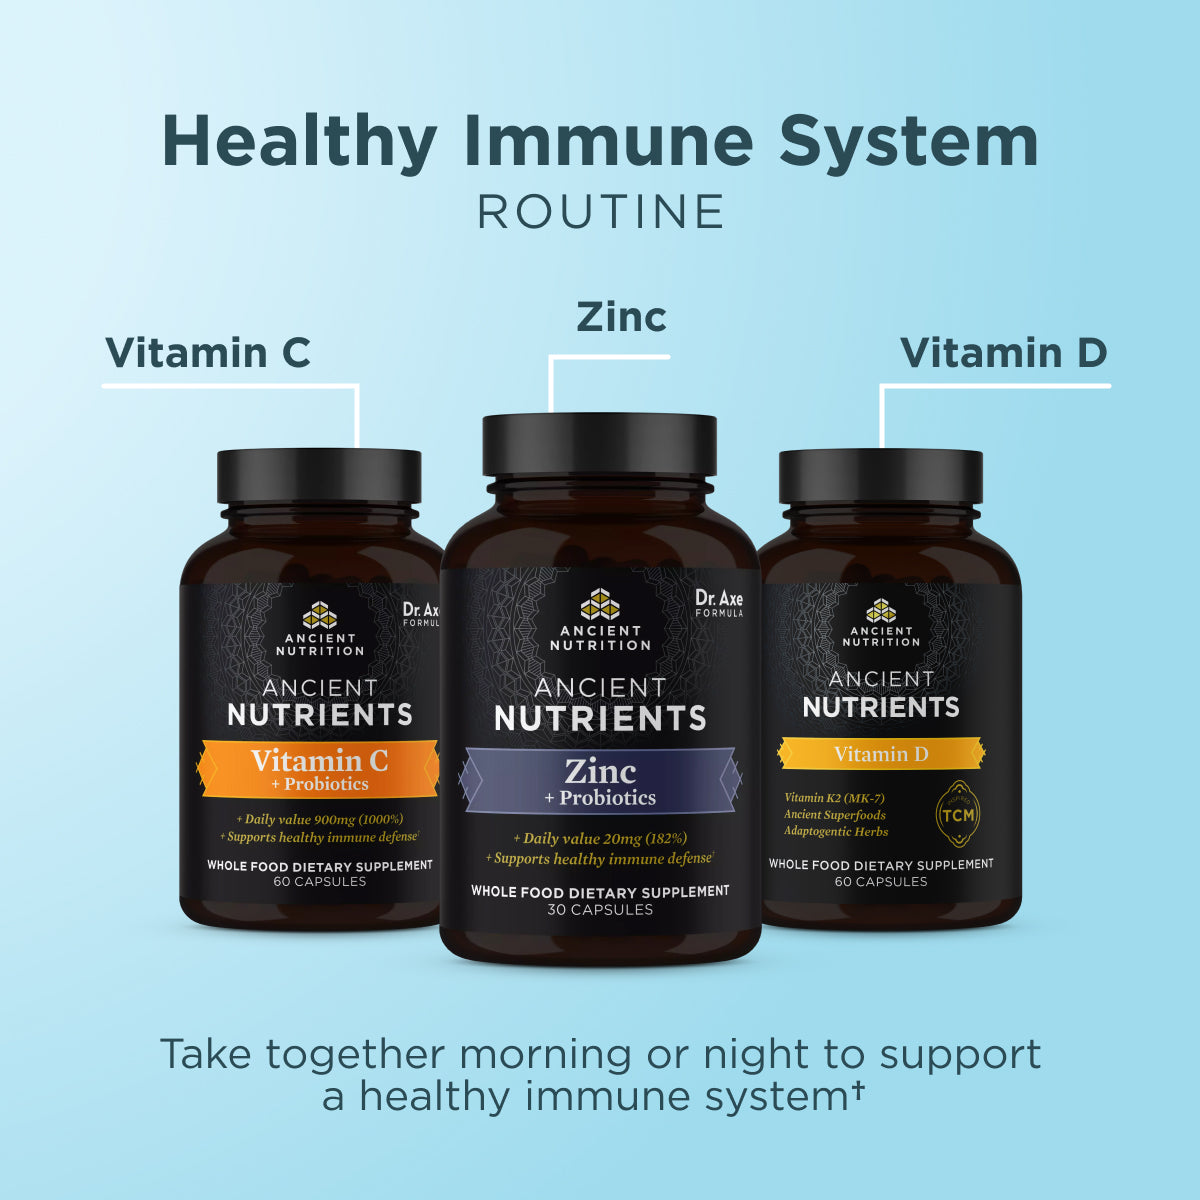 Healthy Immune System Bundle routine